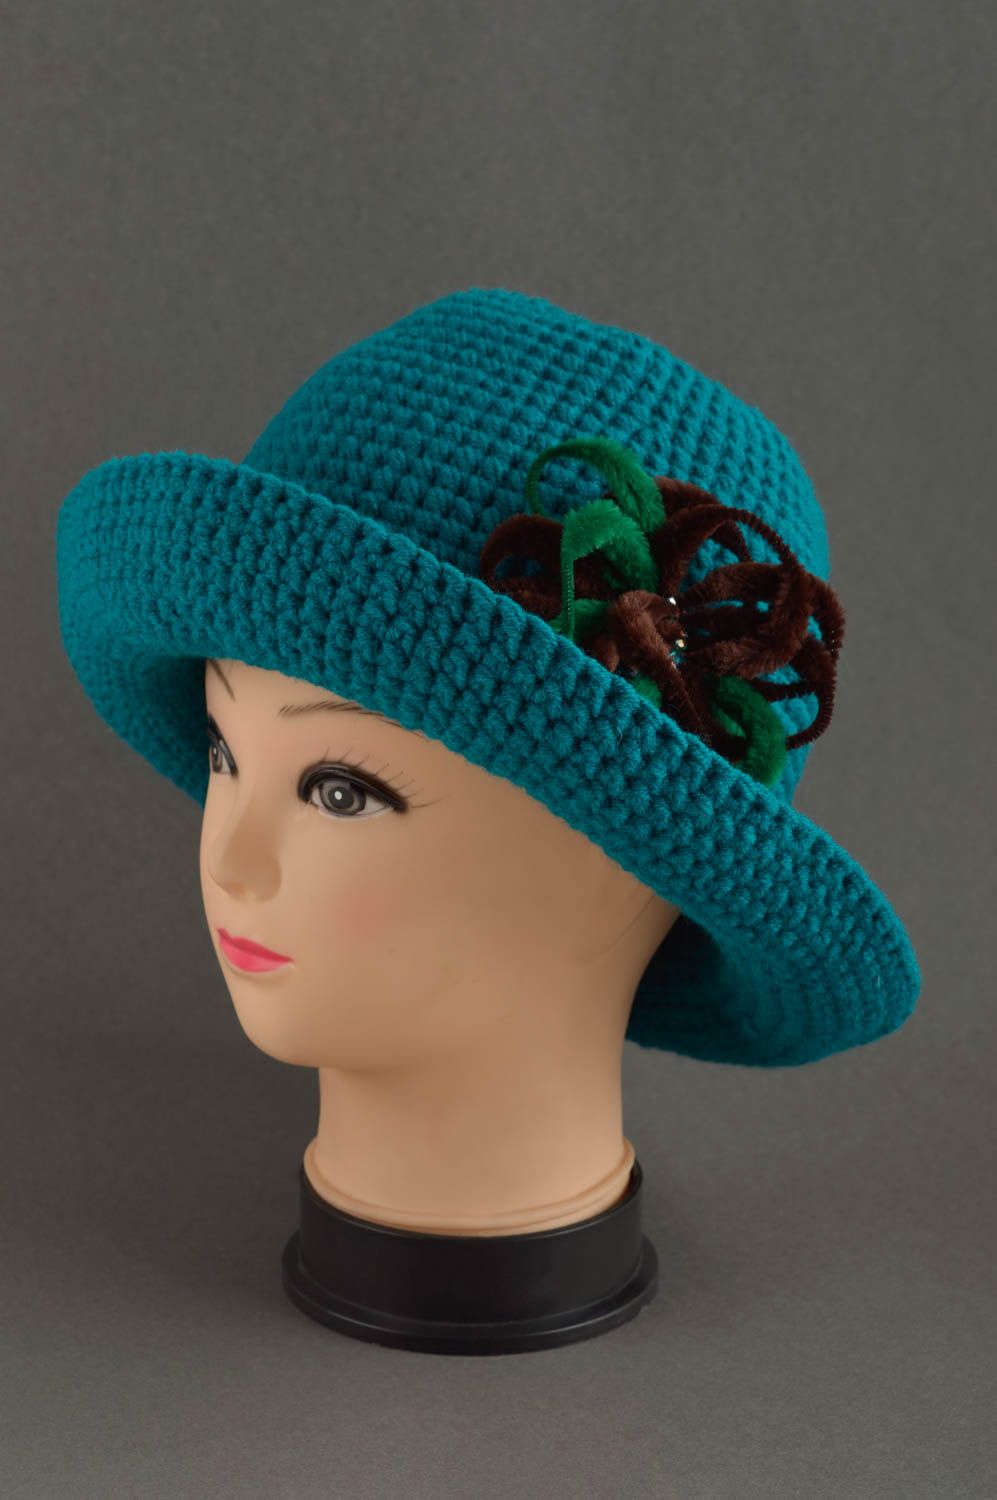 Handmade hat designer hat unusual headwear for girls gift ideas hat for coat photo 1